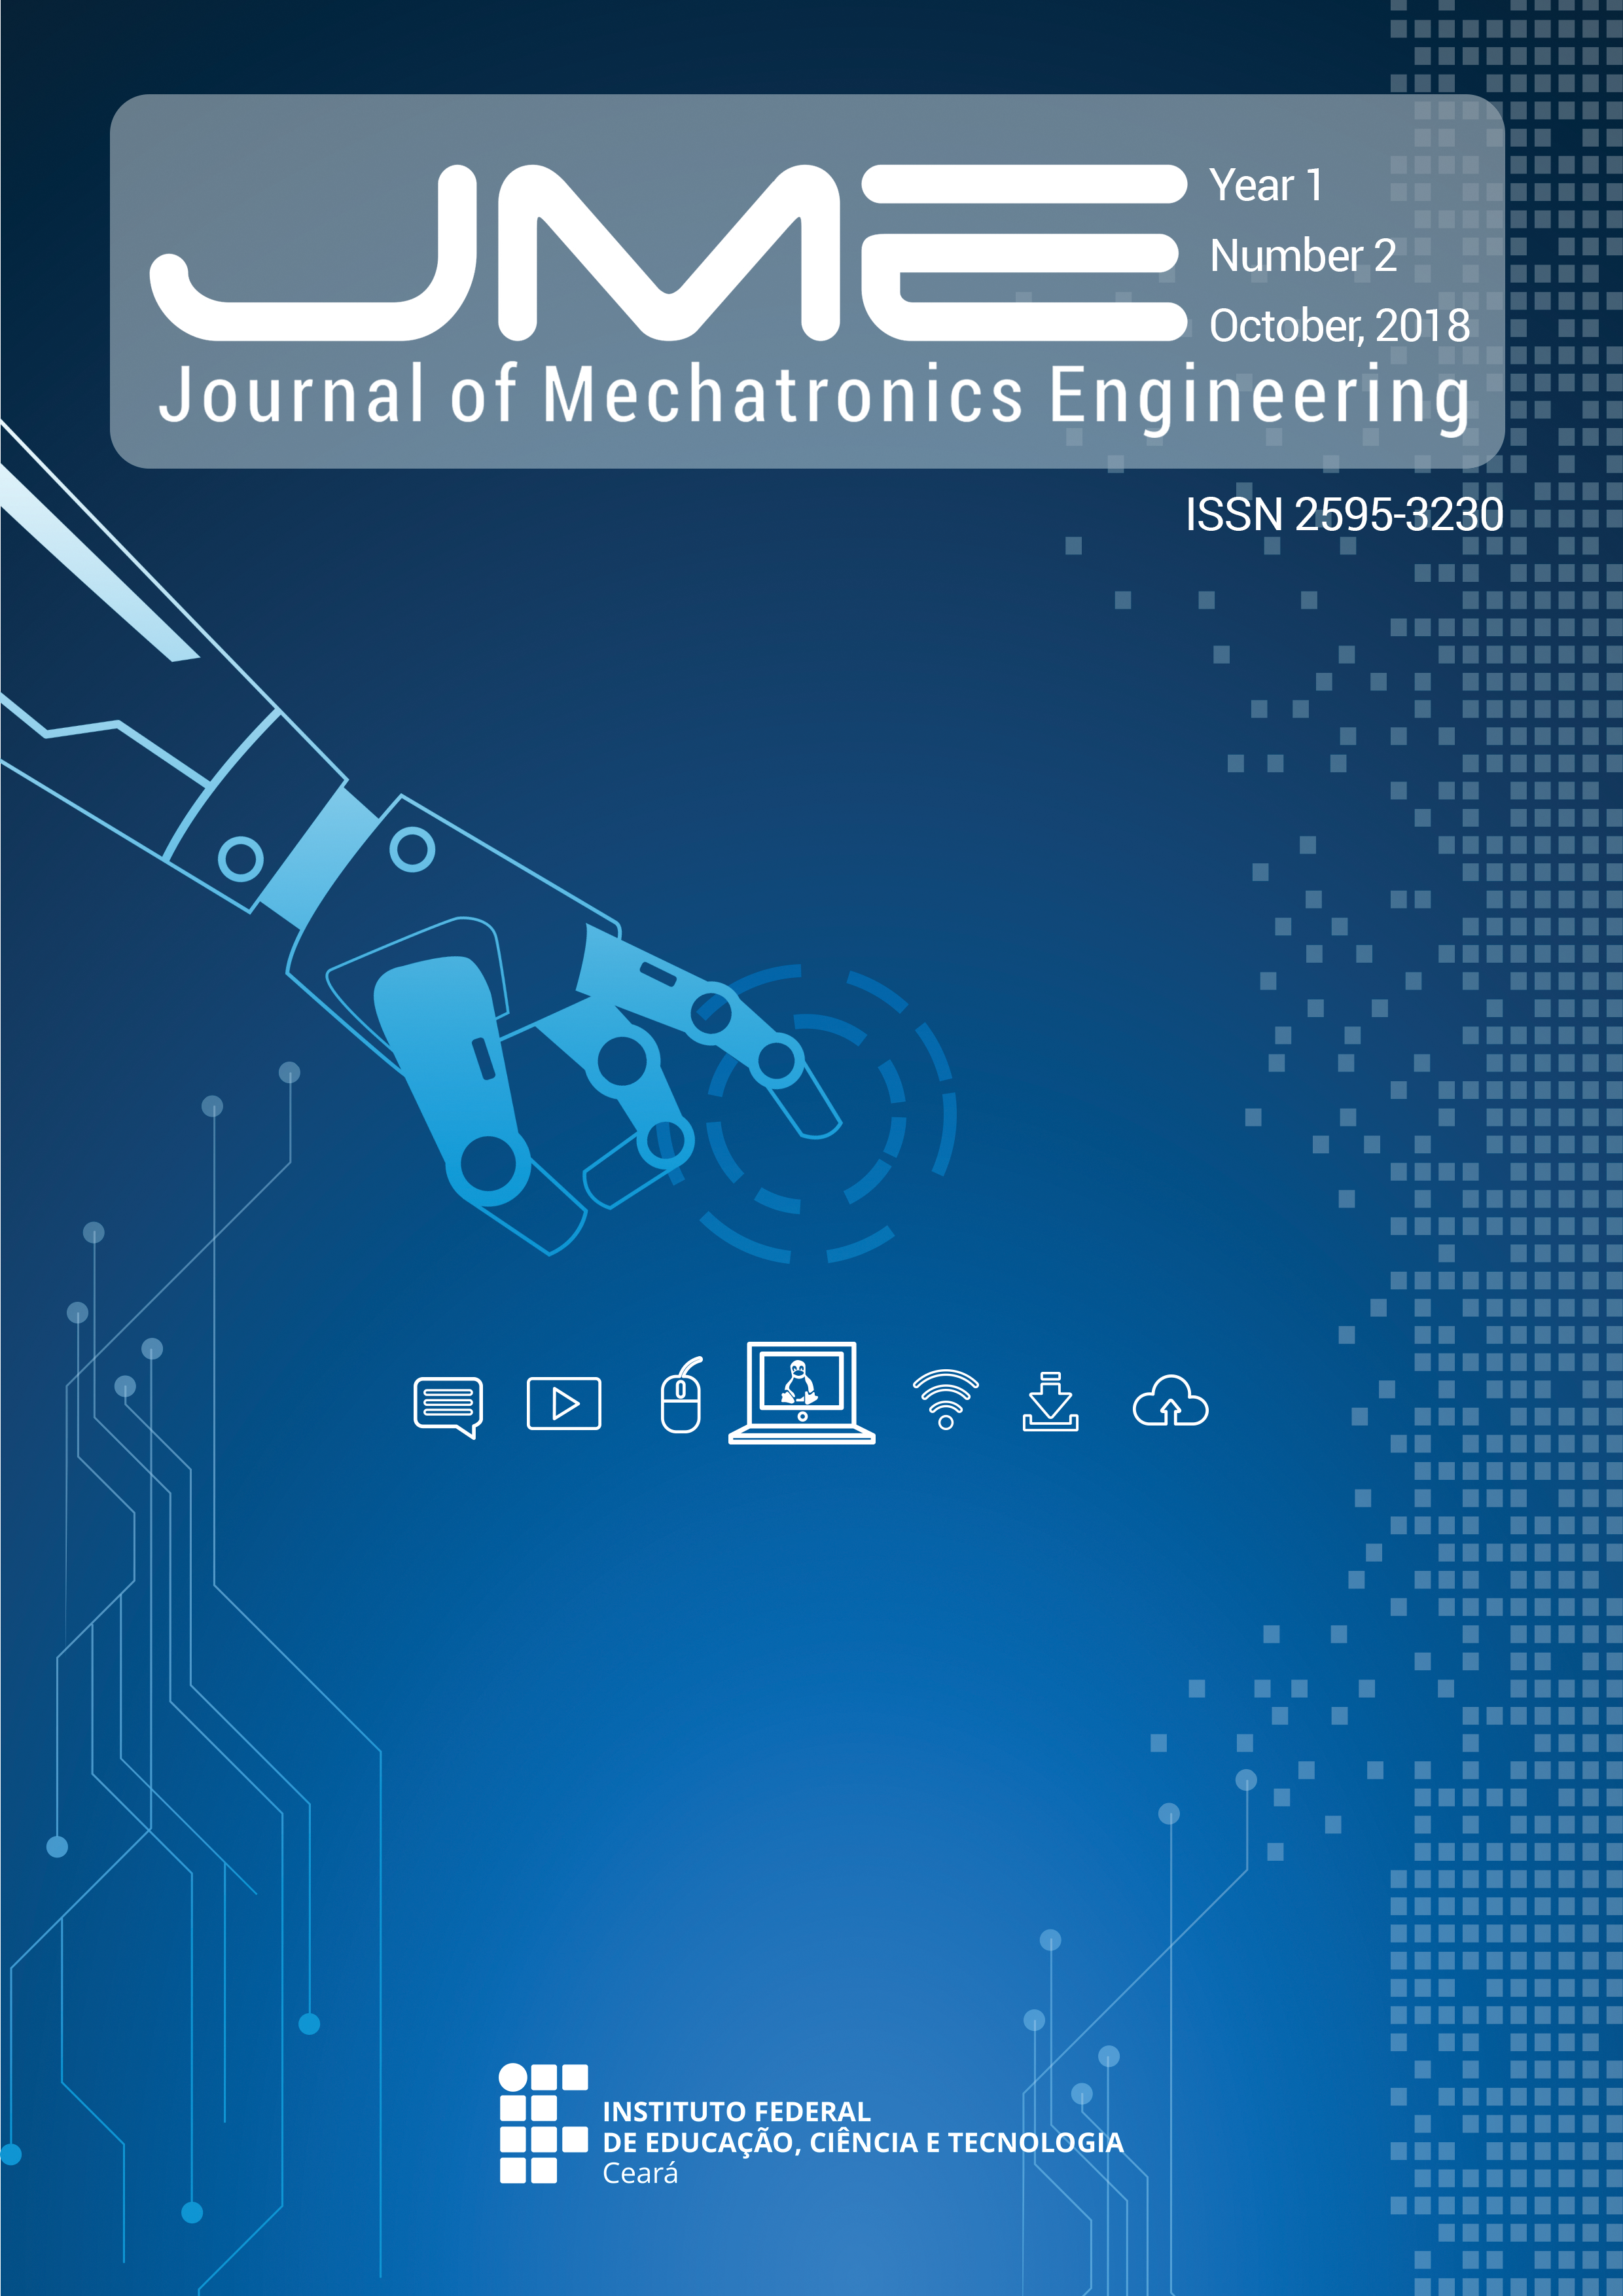 					View Vol. 1 No. 2 (2018): Journal of Mechatronics Engineering, v. 1, n. 2, October, 2018
				